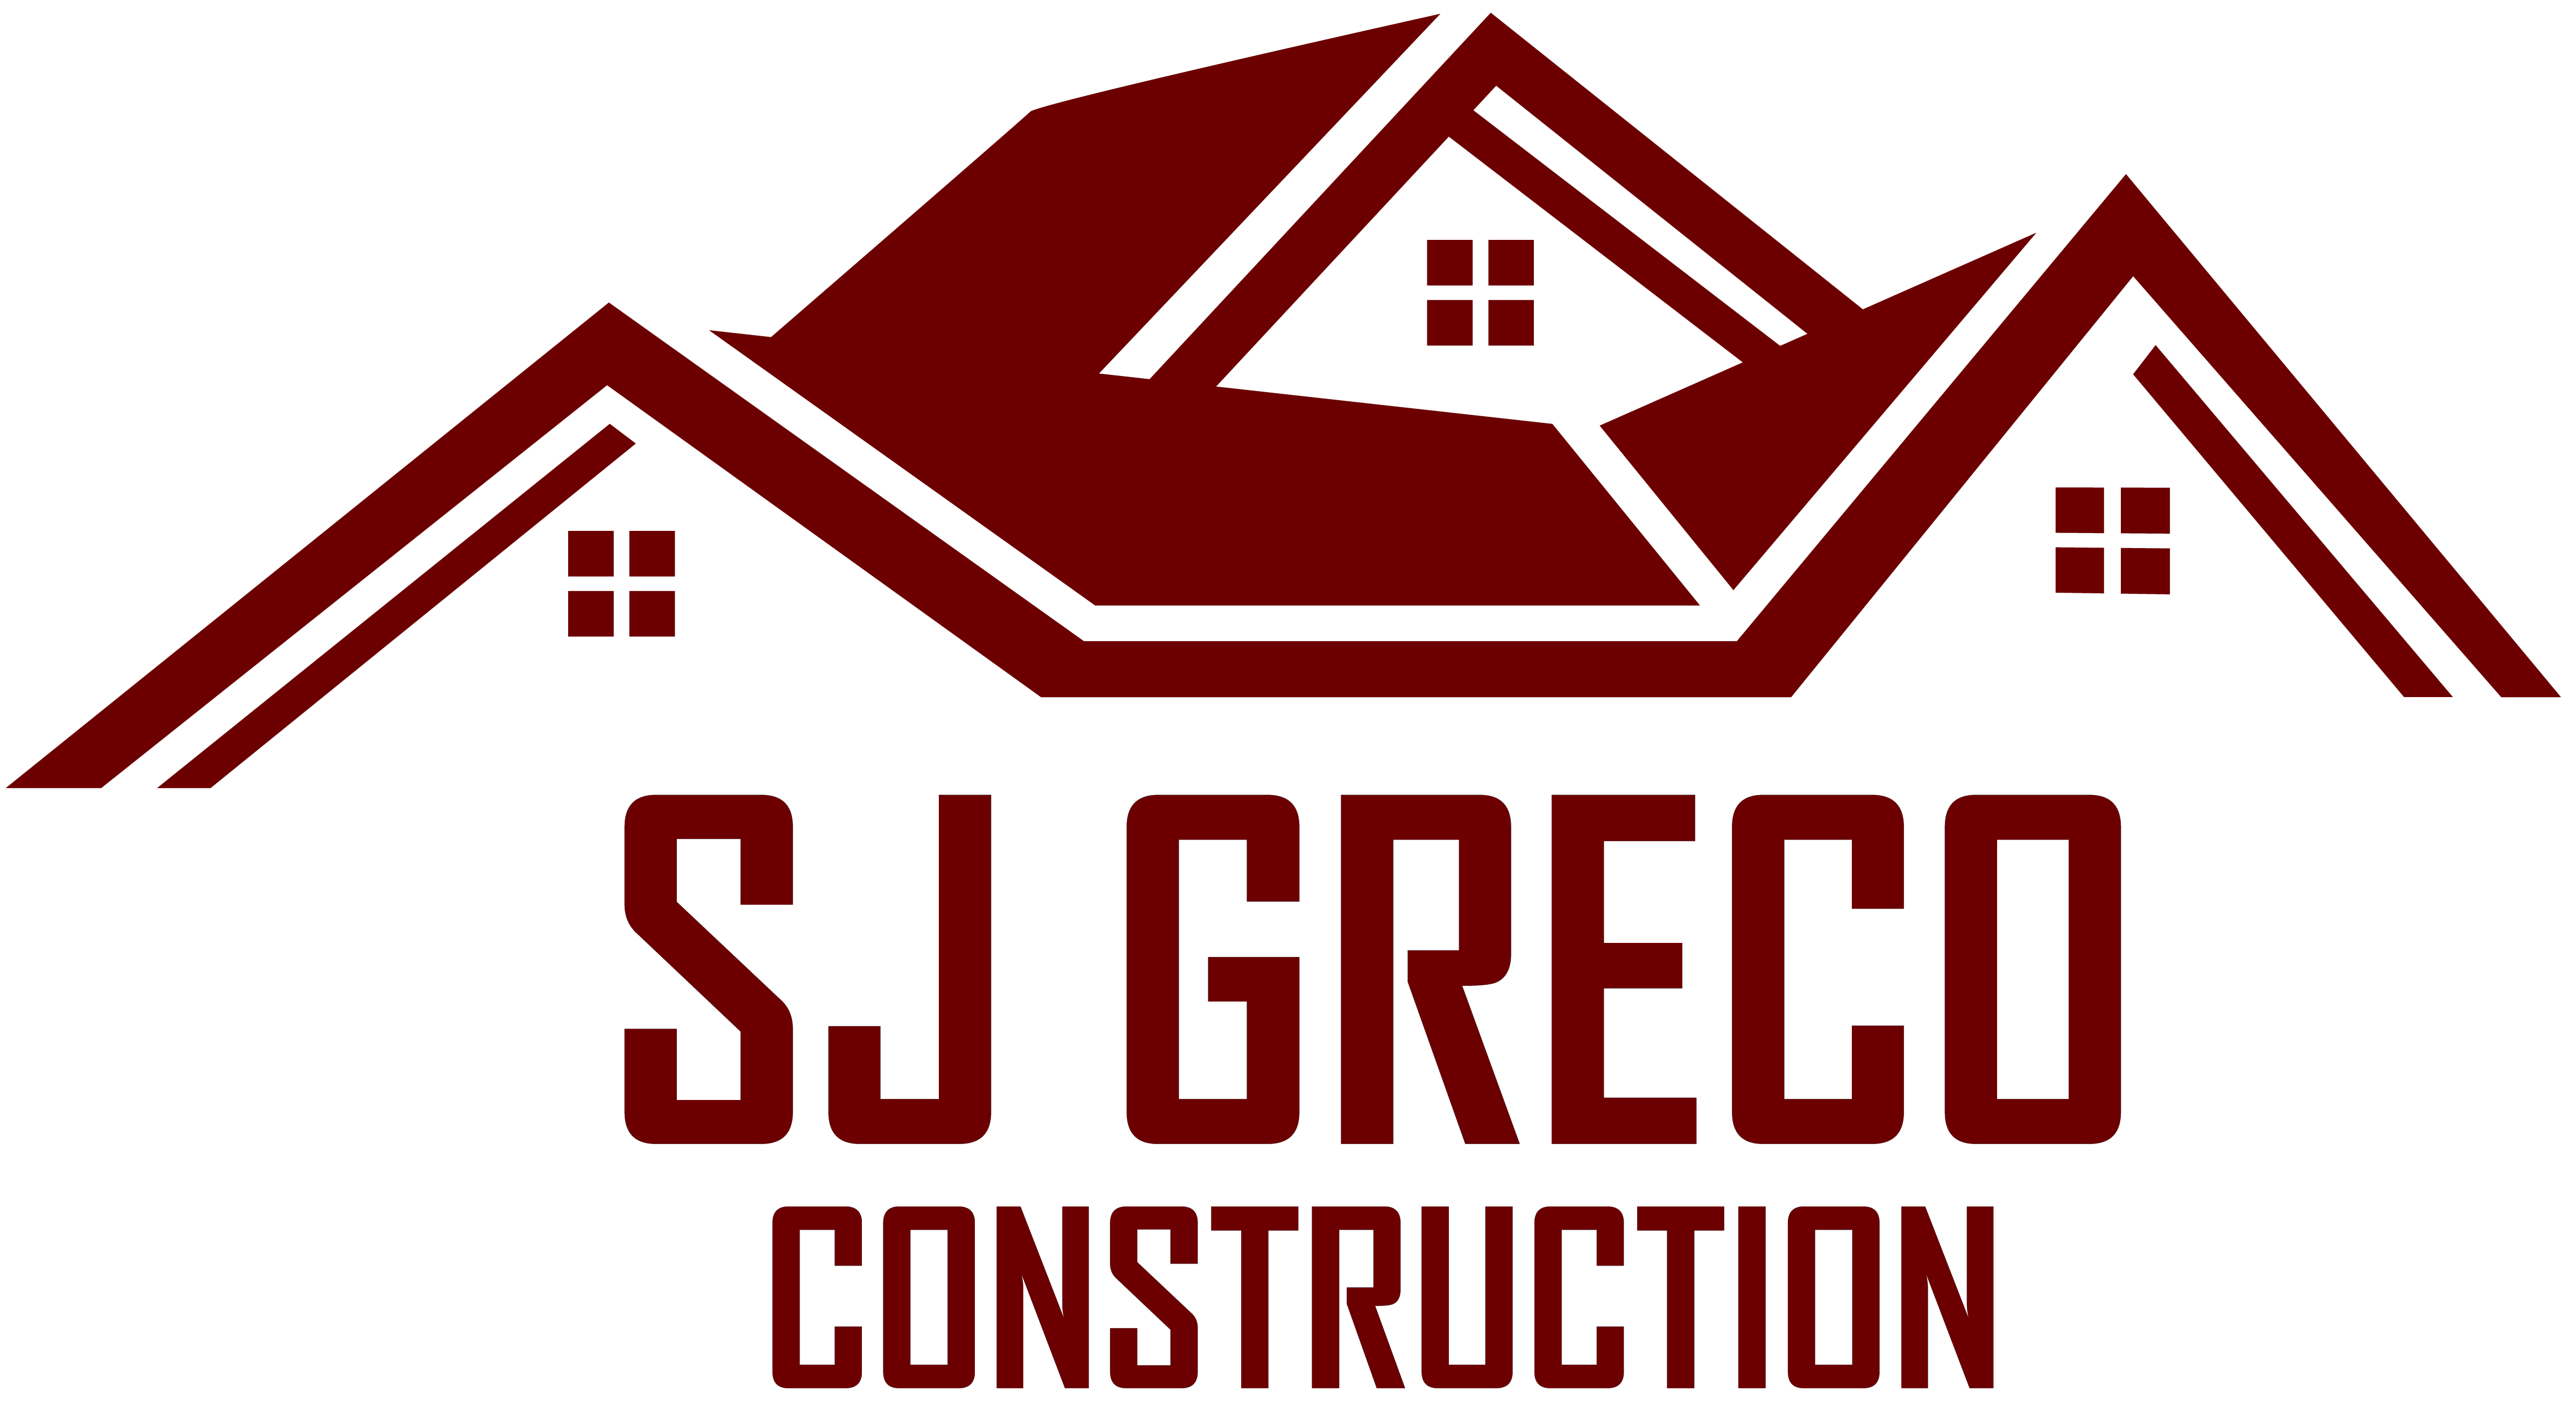 S.J. Greco Construction